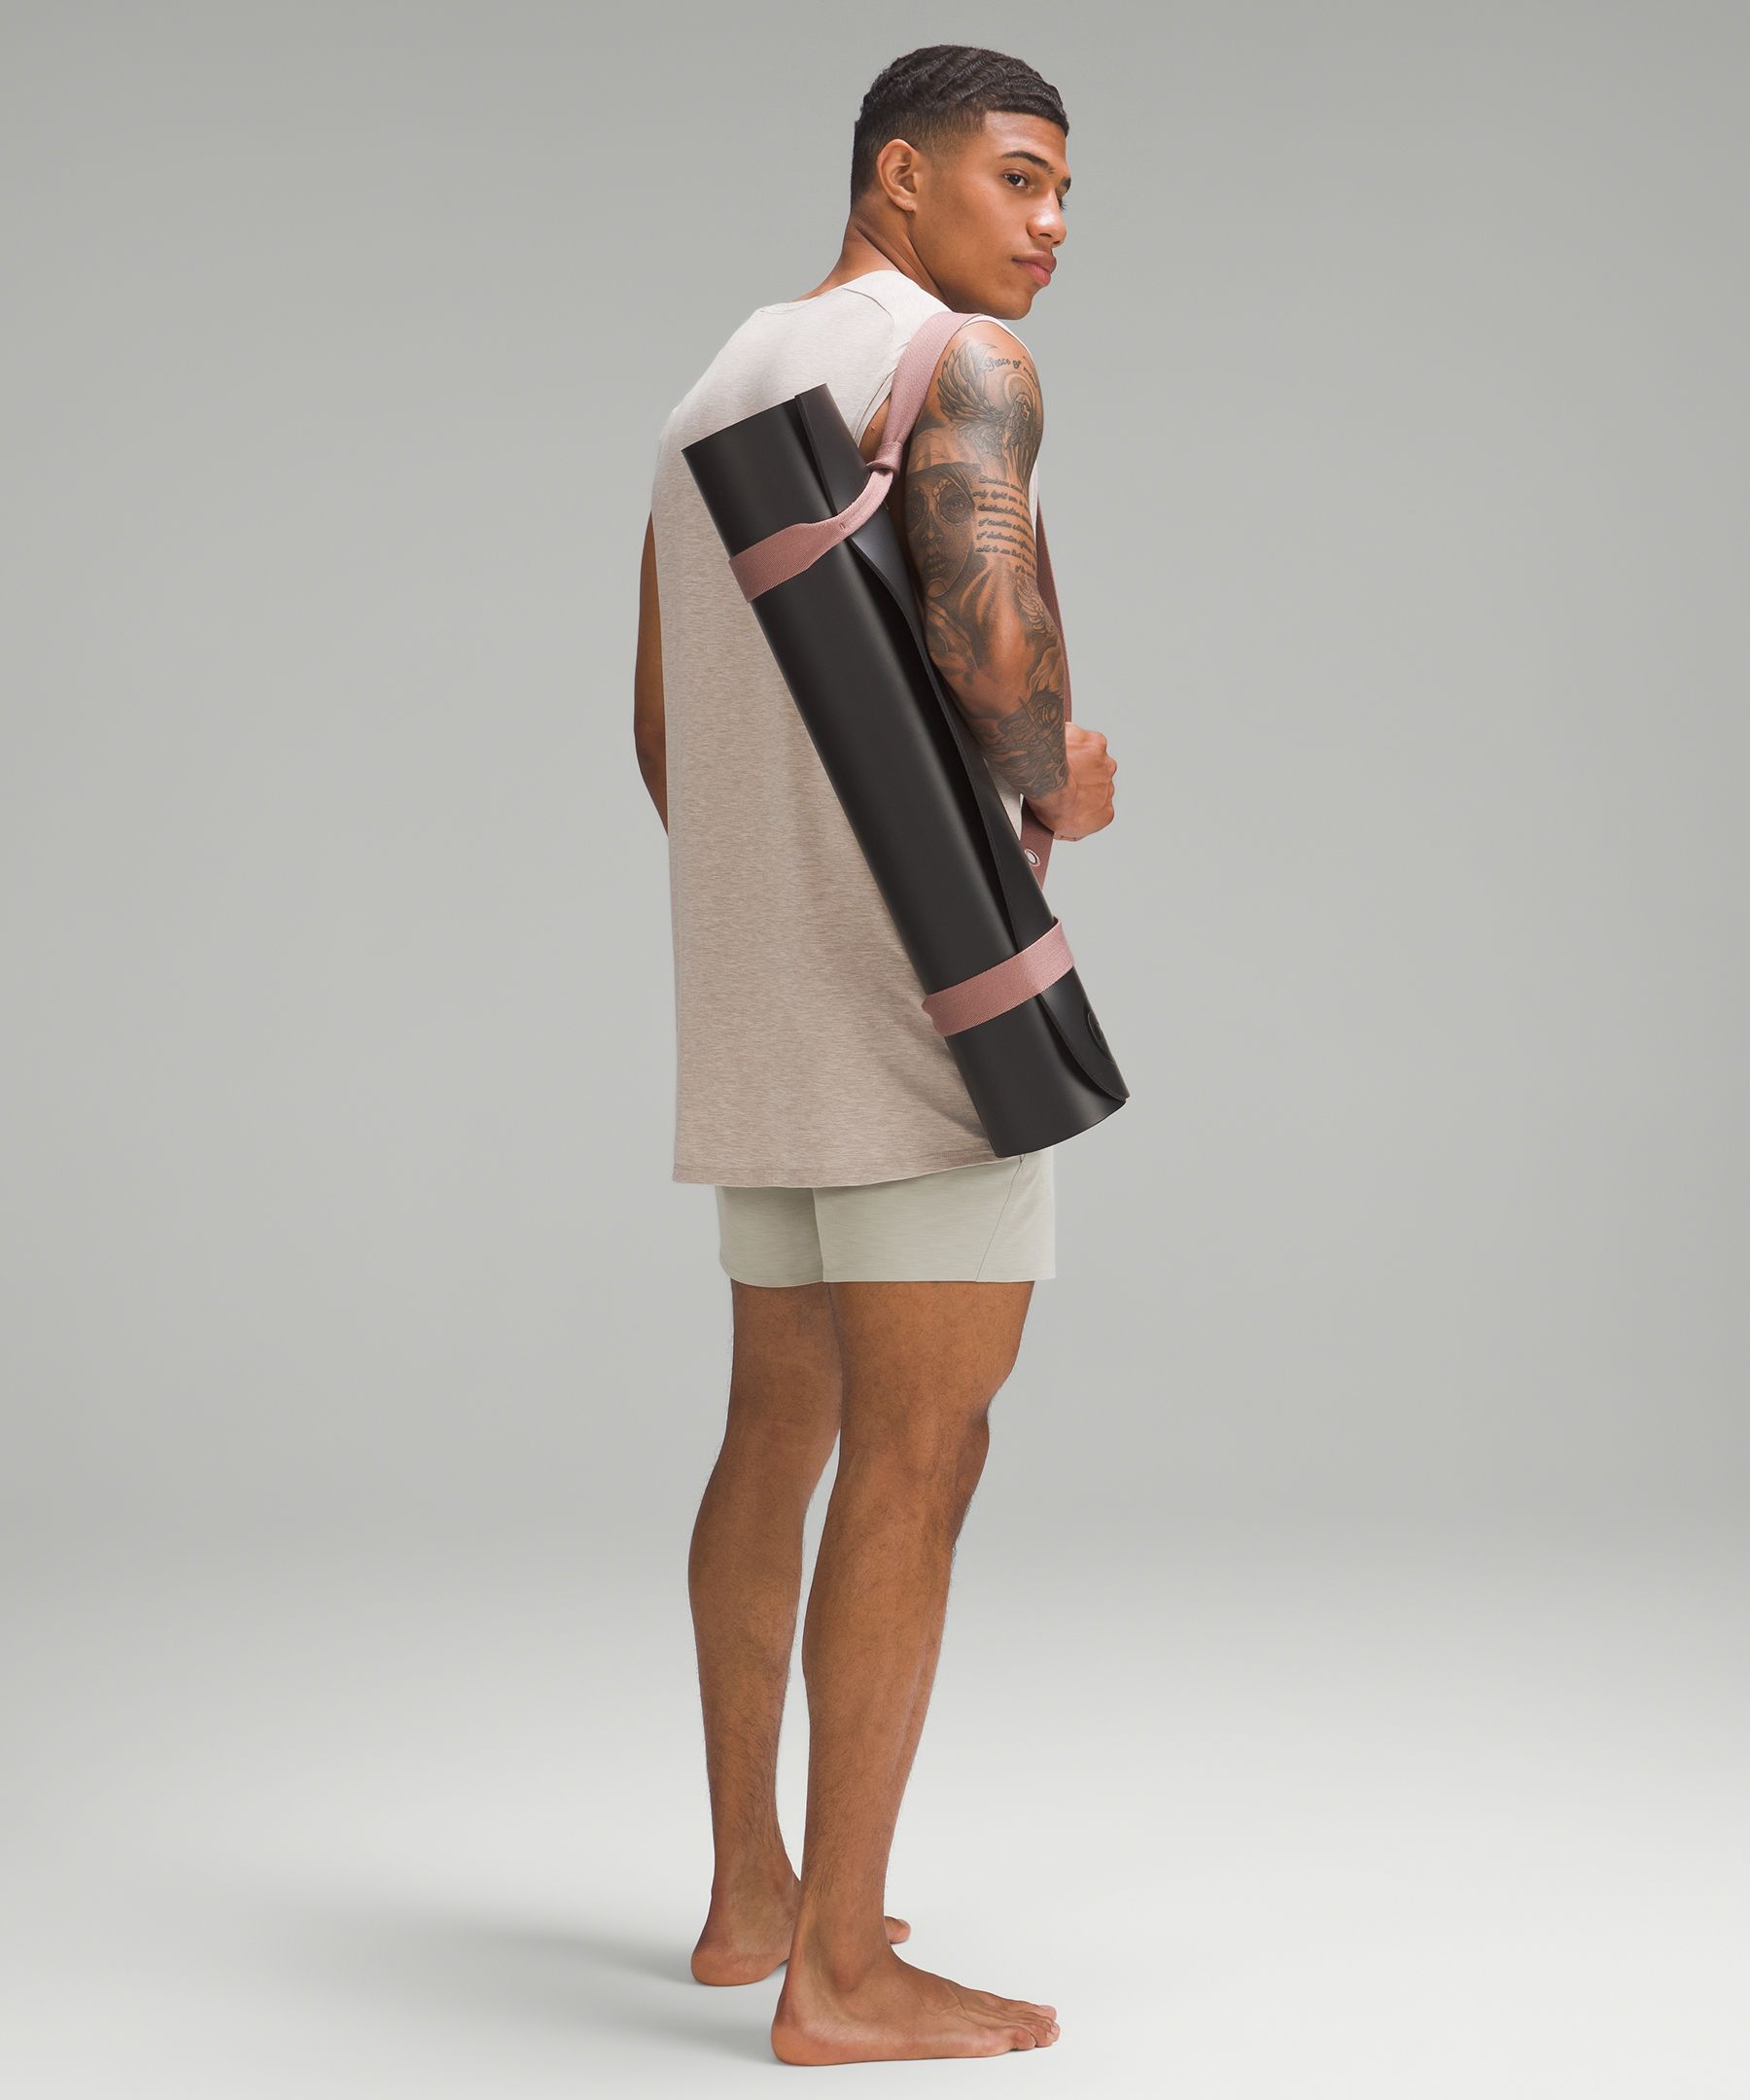 Lululemon Yoga Mat Strap Merchandising – Fixtures Close Up